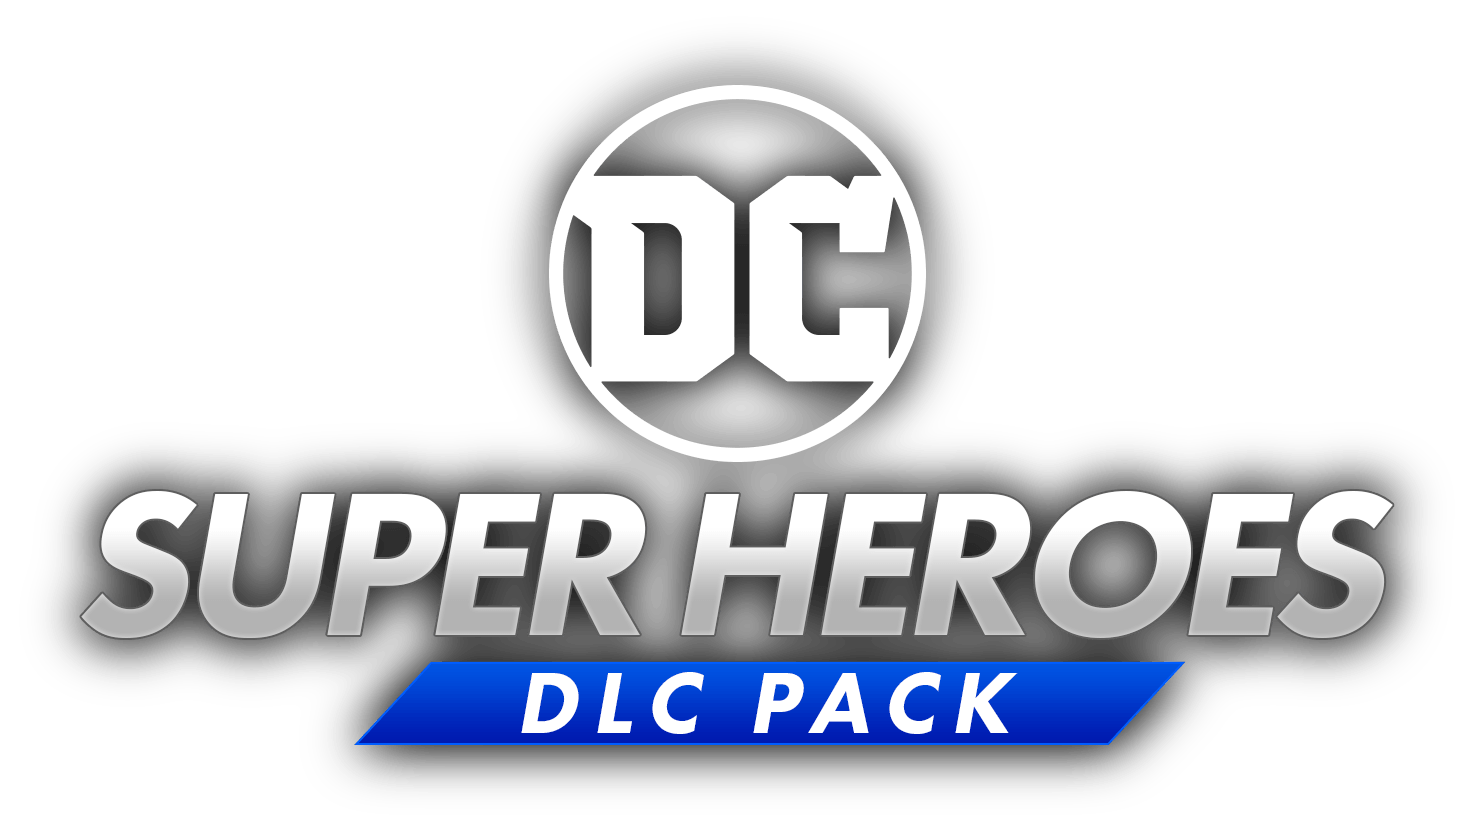 DC Hero Logo - DC Super Heroes DLC Pack. Rocket League®